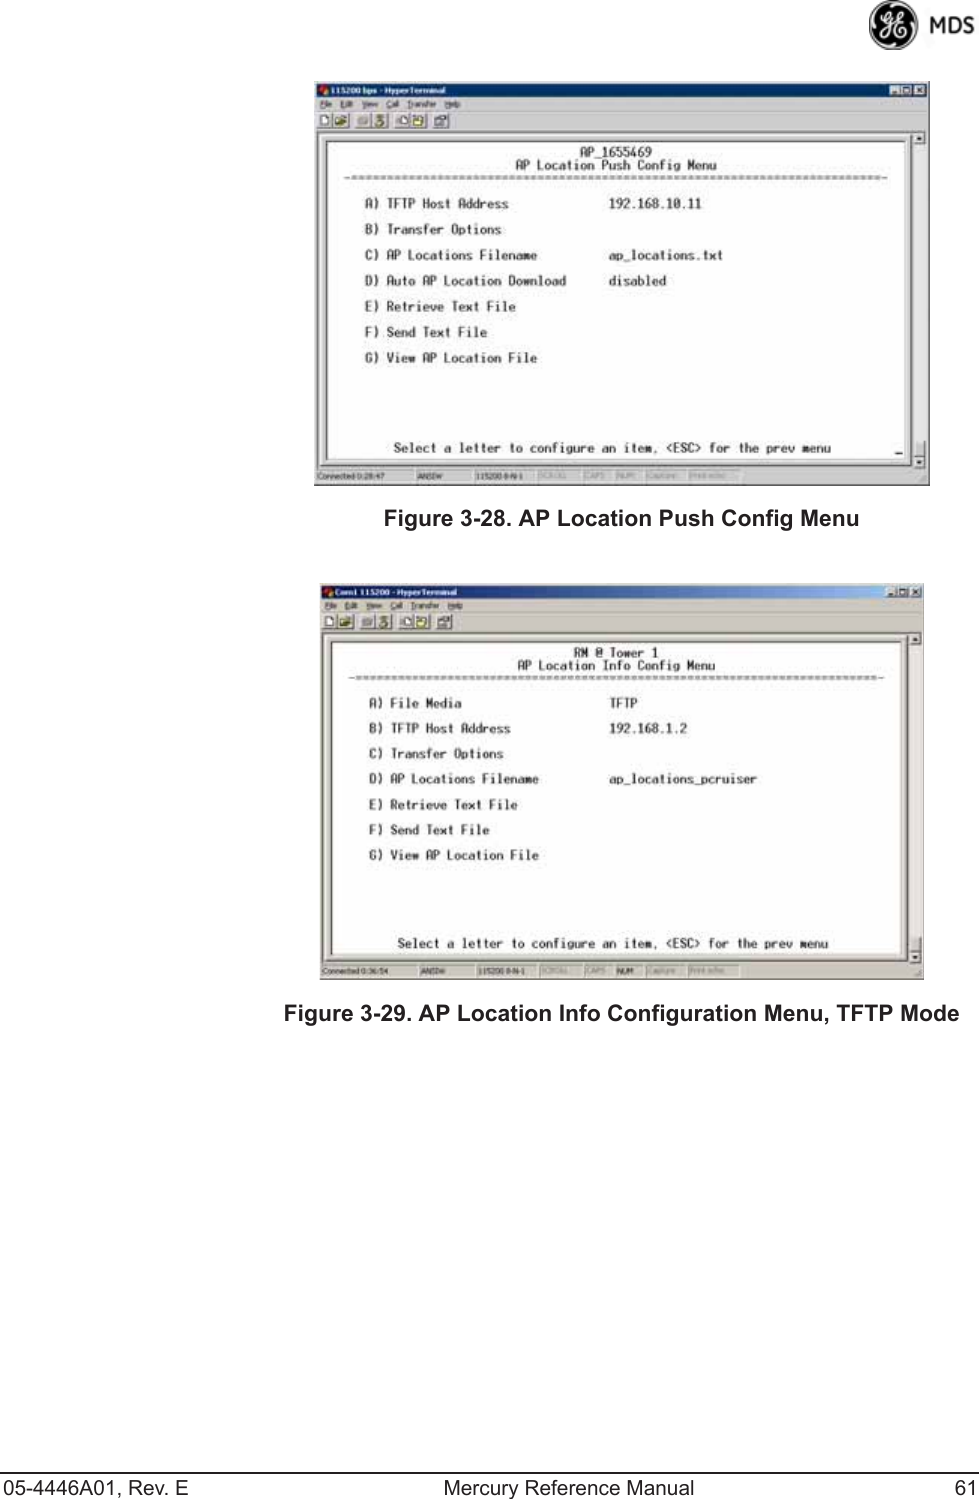 05-4446A01, Rev. E Mercury Reference Manual 61Invisible place holderFigure 3-28. AP Location Push Config MenuInvisible place holderFigure 3-29. AP Location Info Configuration Menu, TFTP Mode